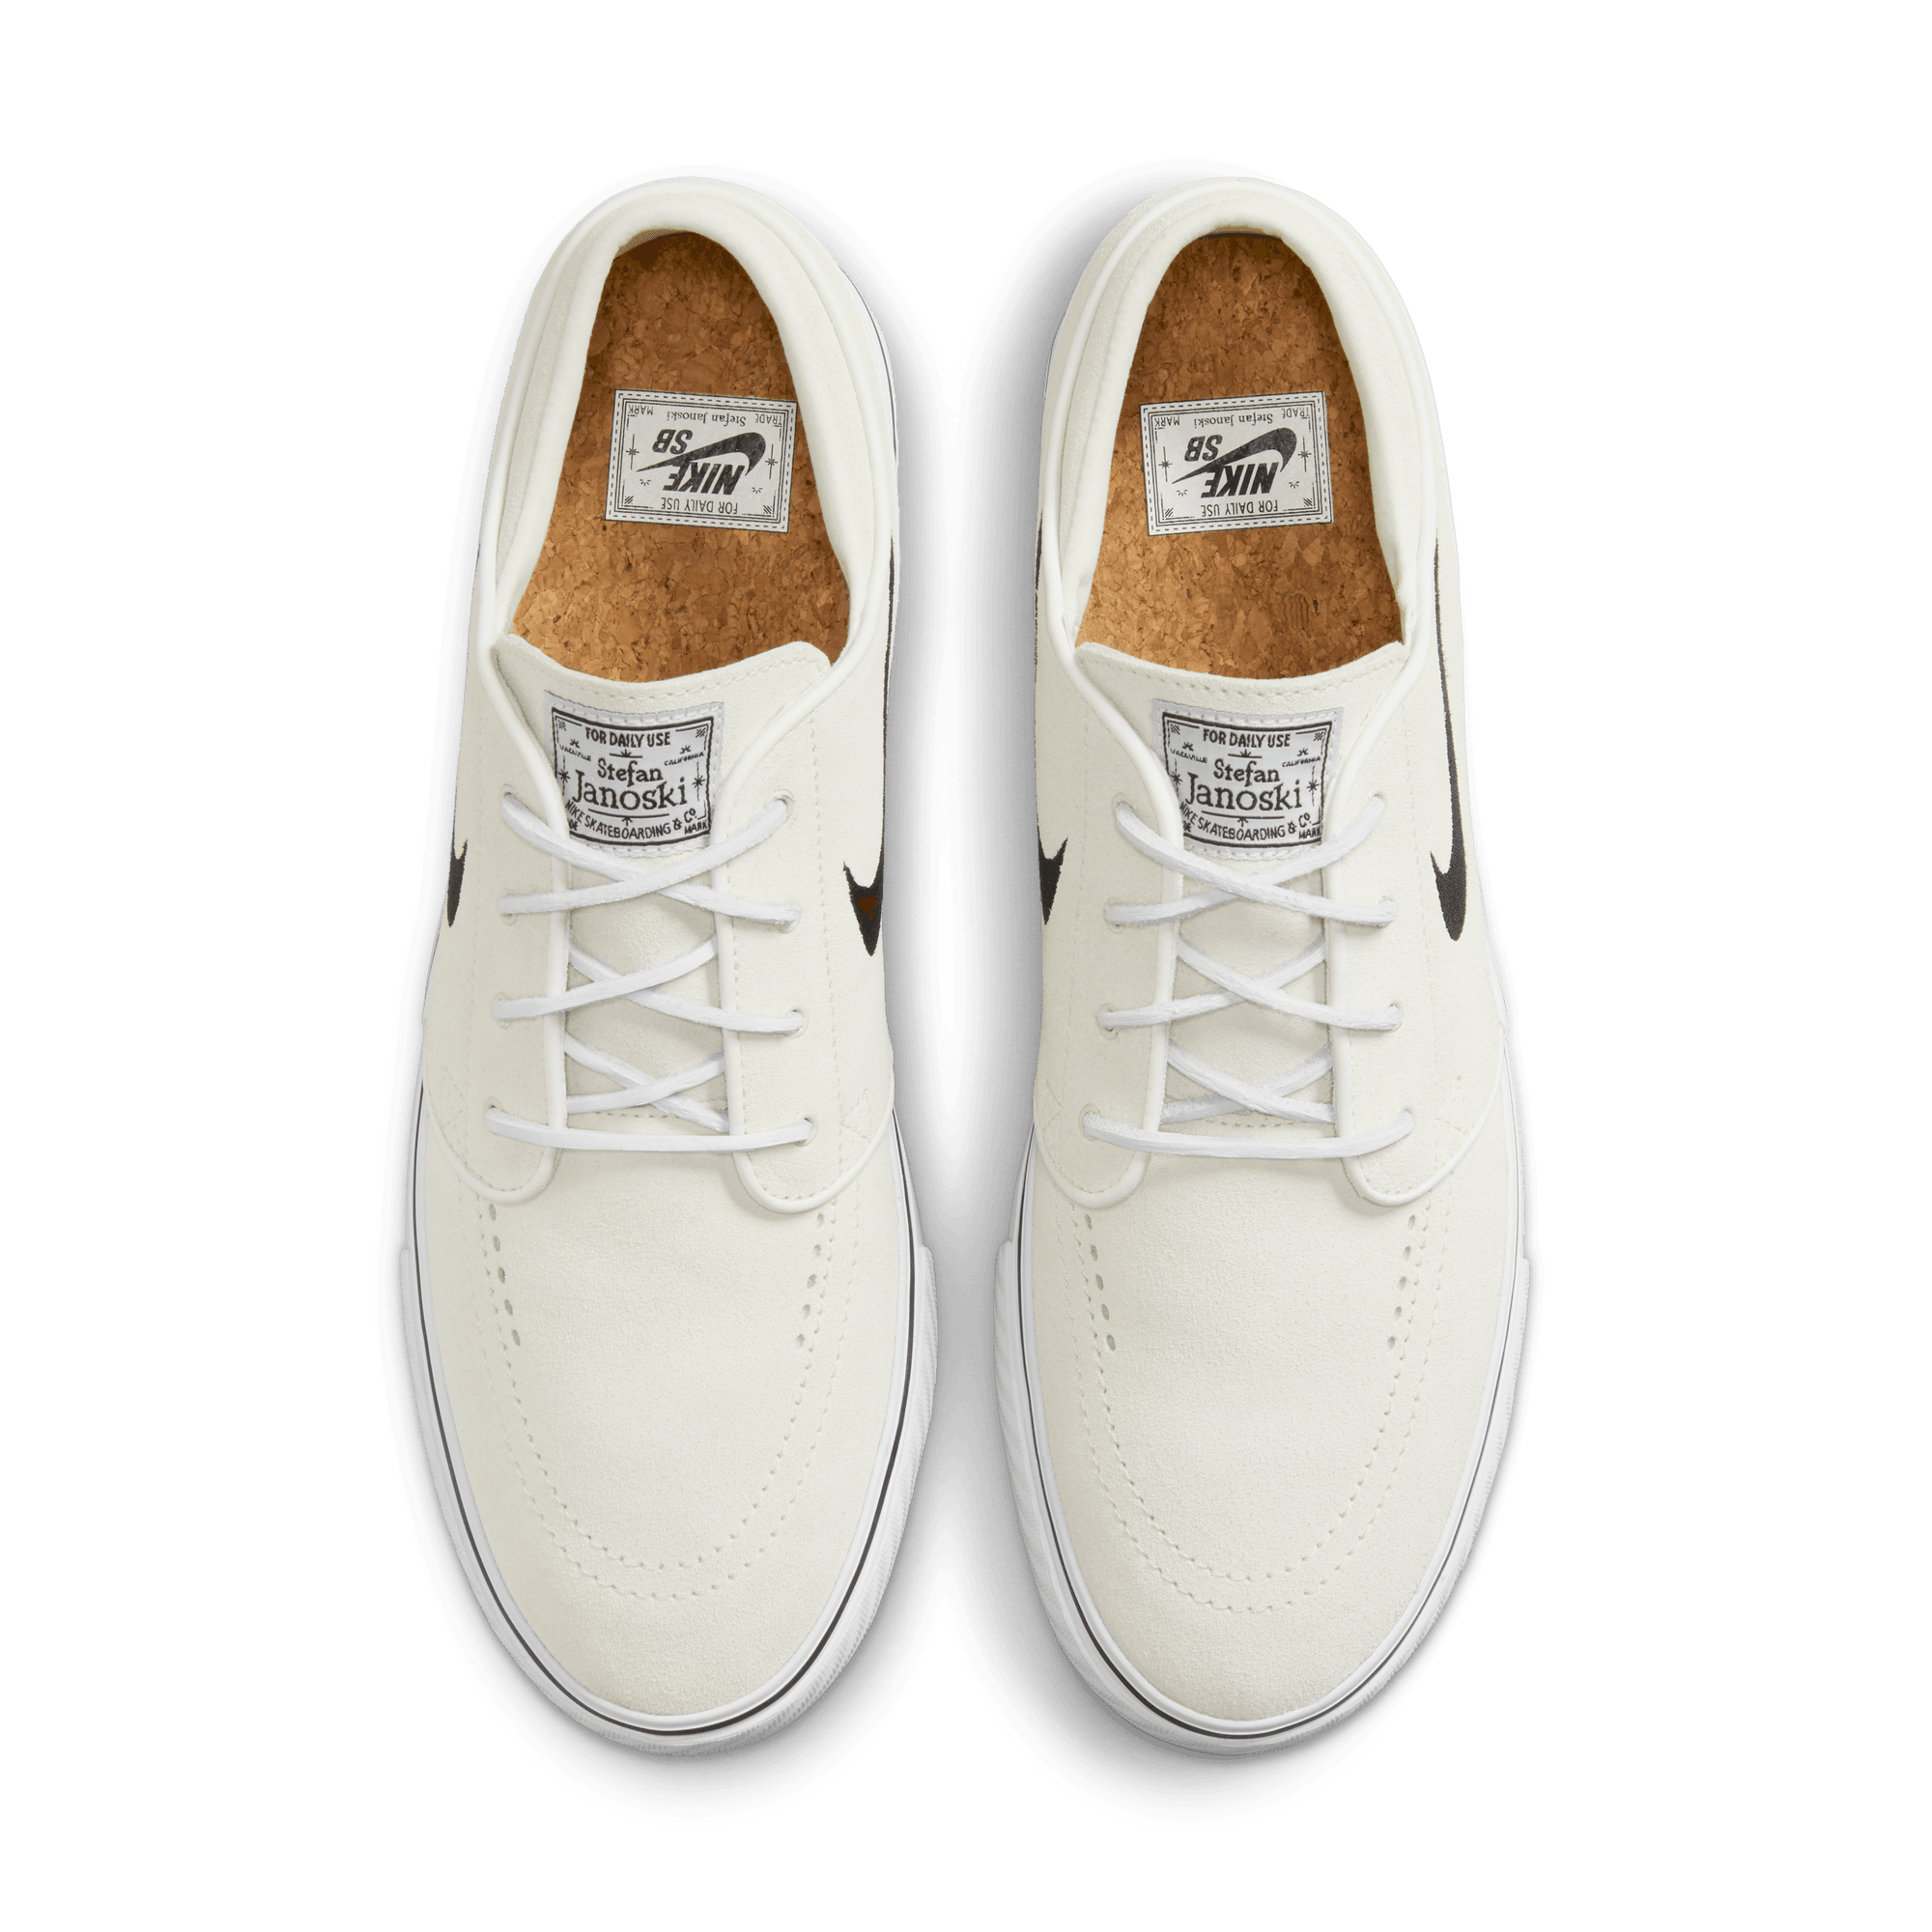 Summit White OG+ Nike SB Janoski Skate Shoe Top